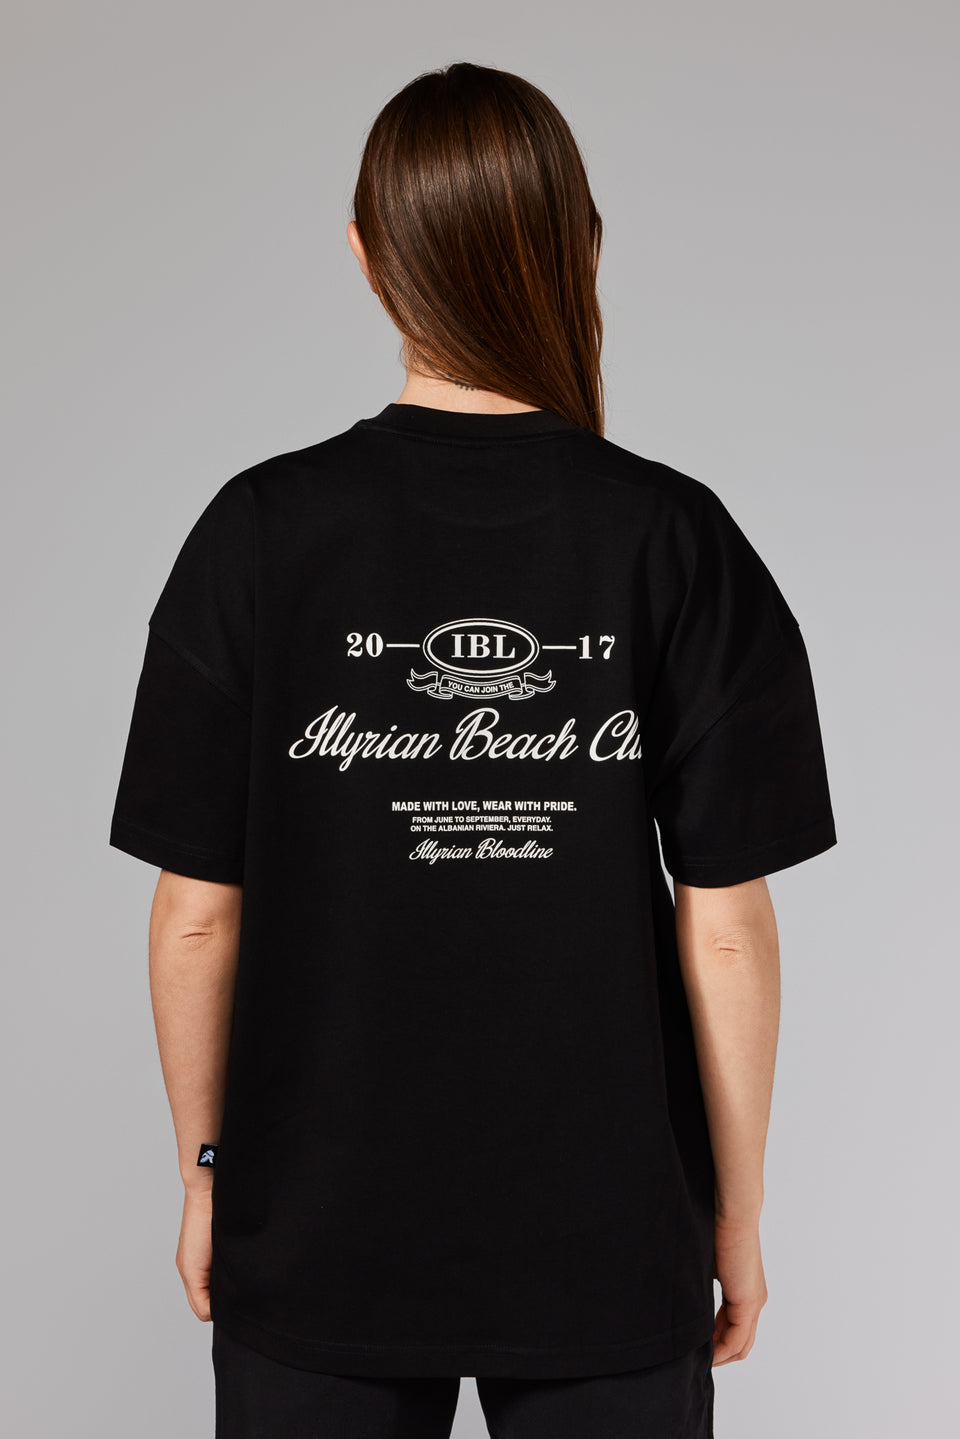 Illyrian Beach Club T-Shirt